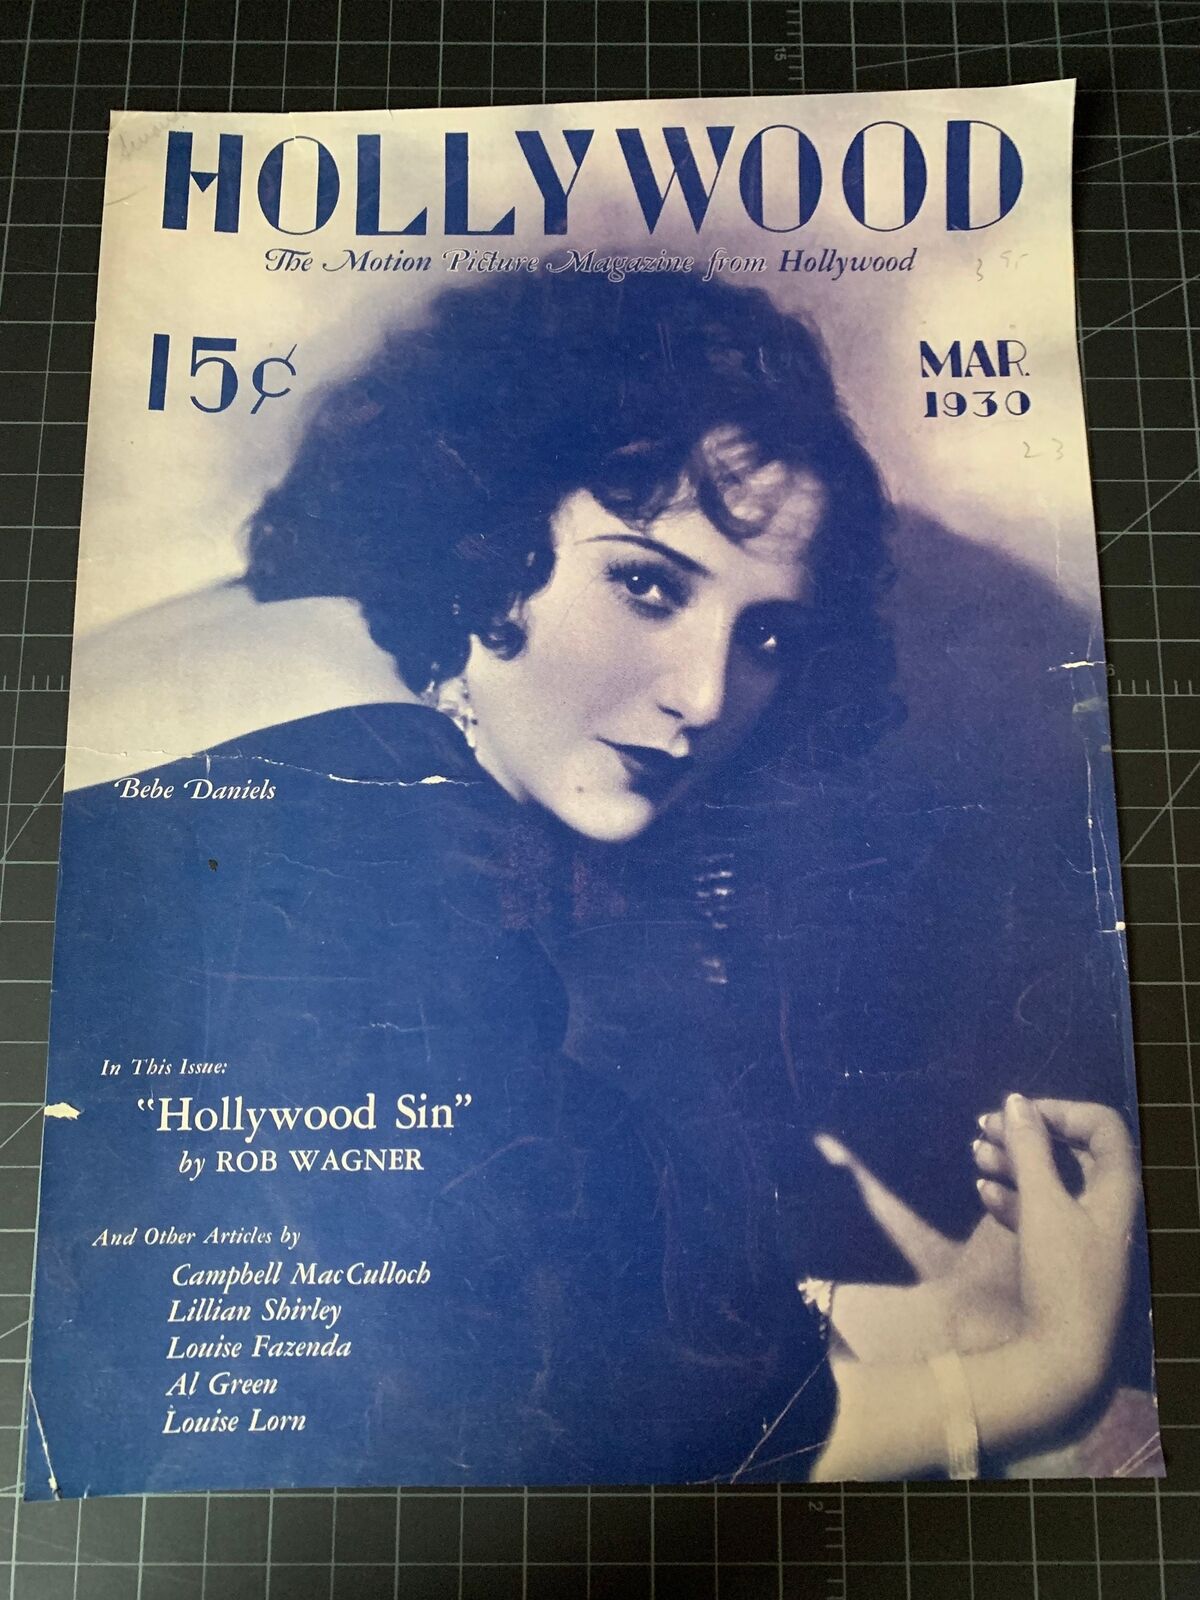 Rare Vintage 1930 Hollywood Magazine Cover - Bebe Daniels